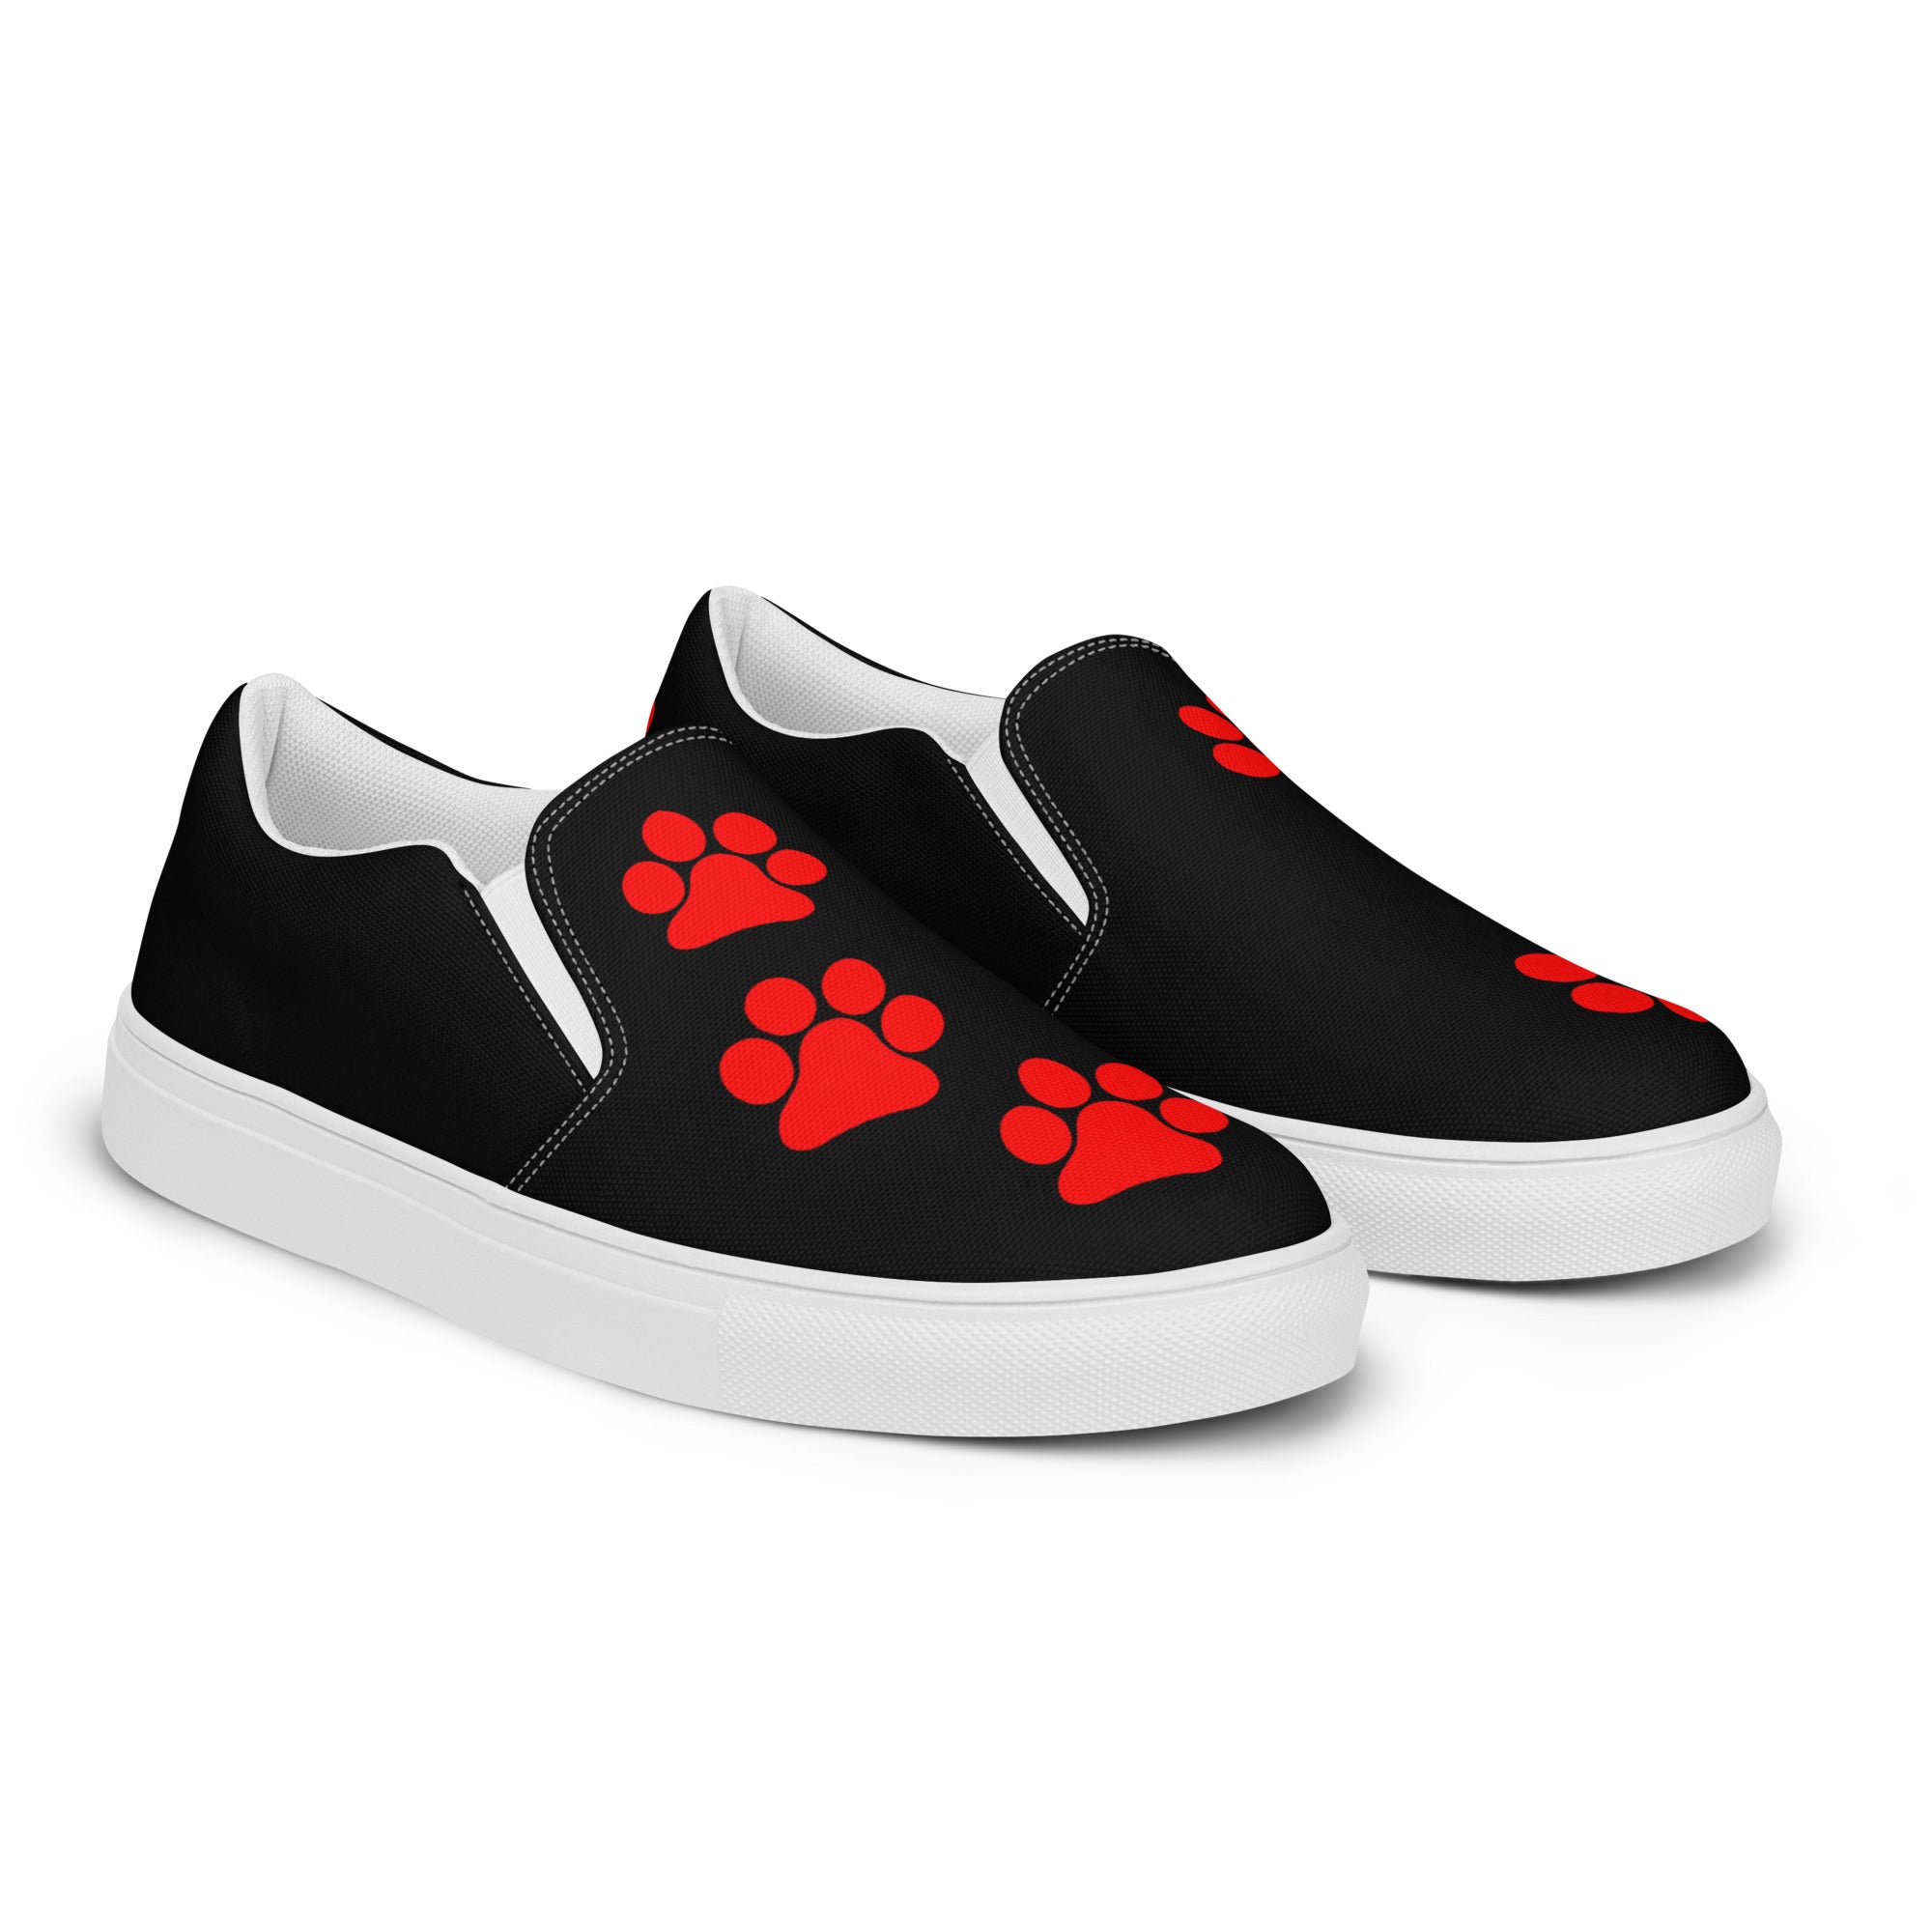 Men’s slip-on Black Red Paw shoes